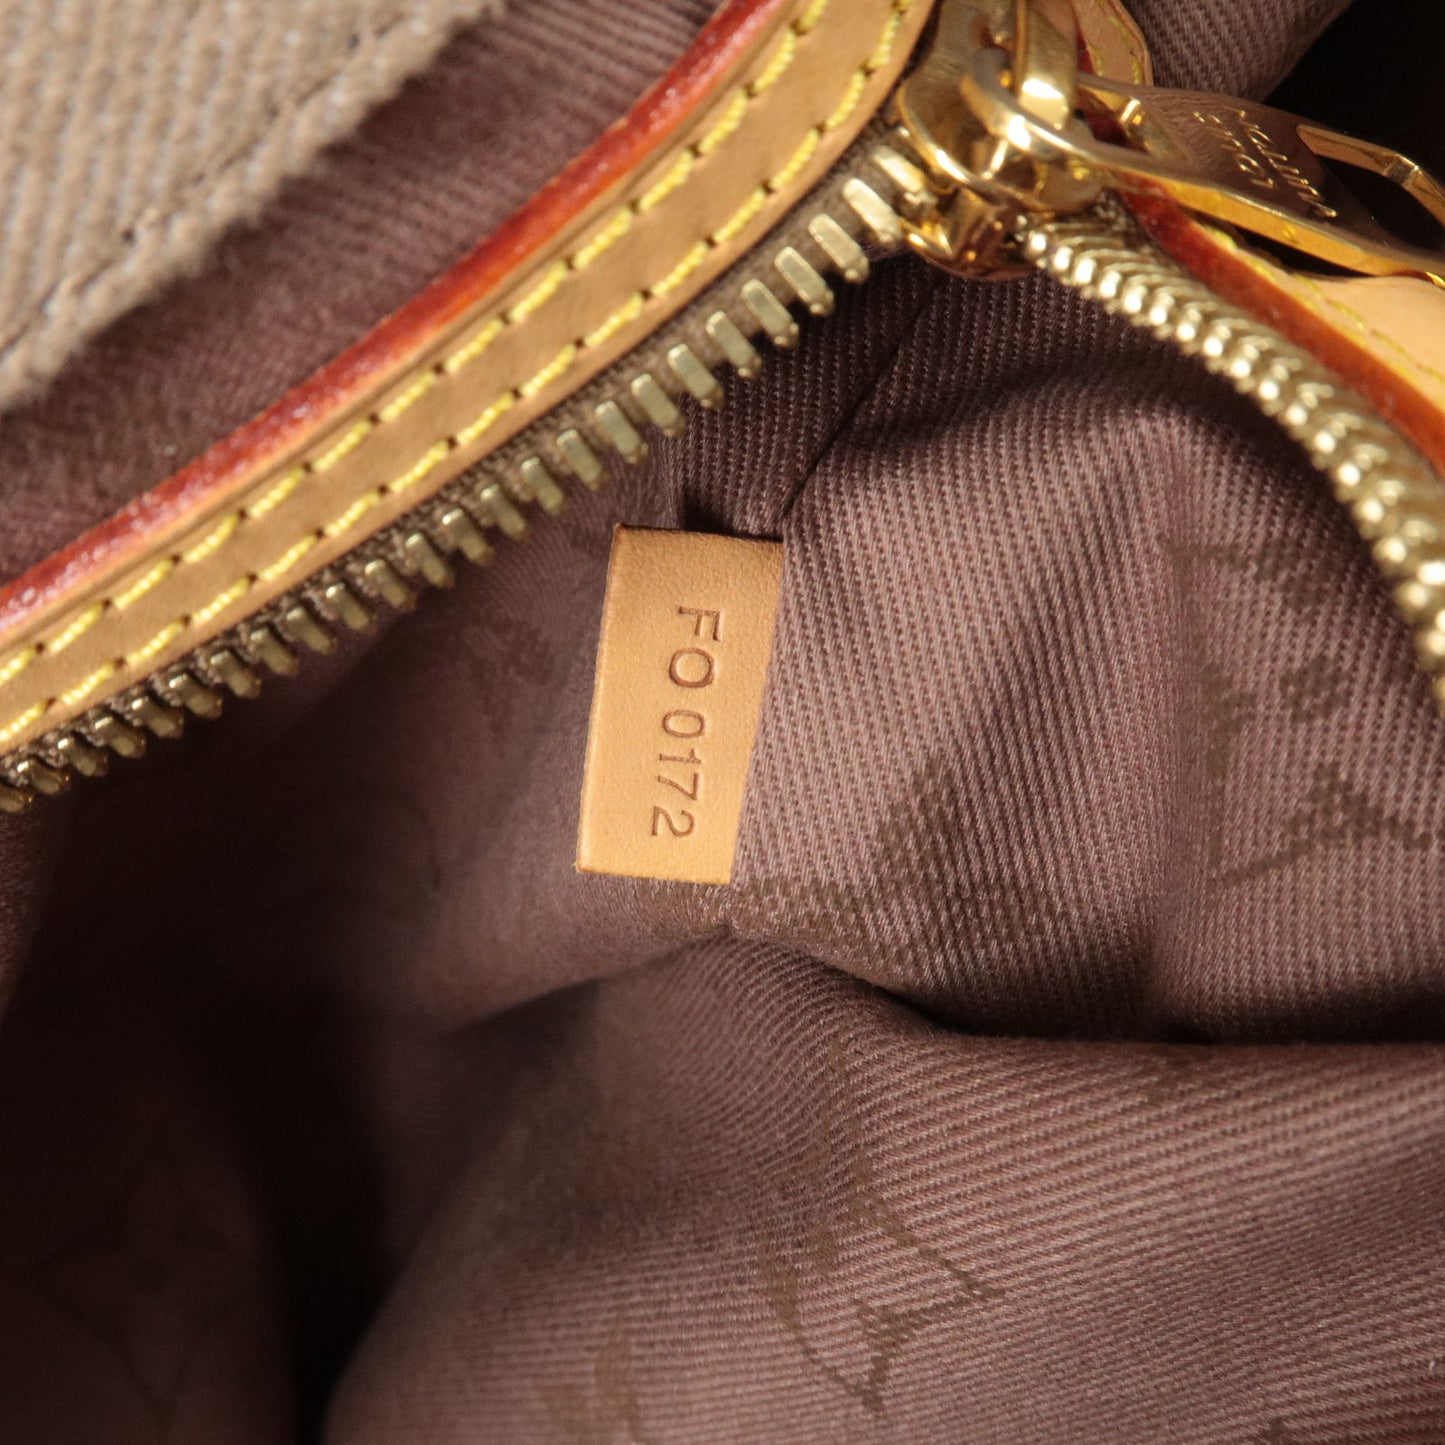 Louis Vuitton Plein Soleil Cabas PM Tote Bag Beige M94144